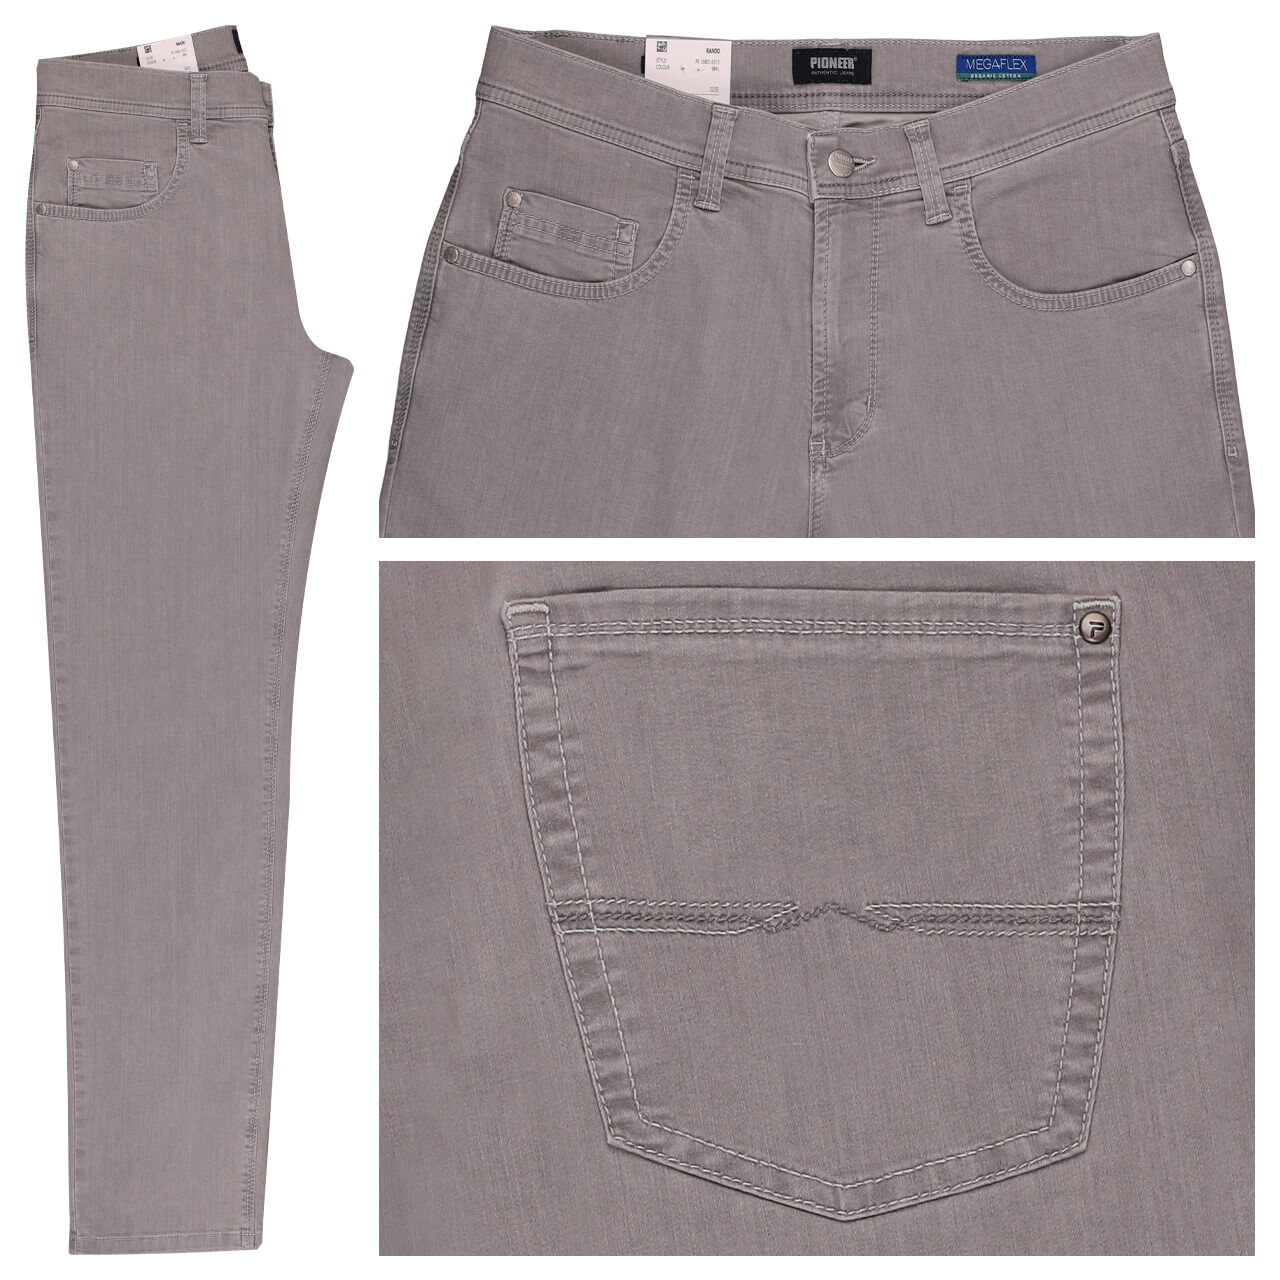 Pioneer Rando Jeans Megaflex light grey stonewash